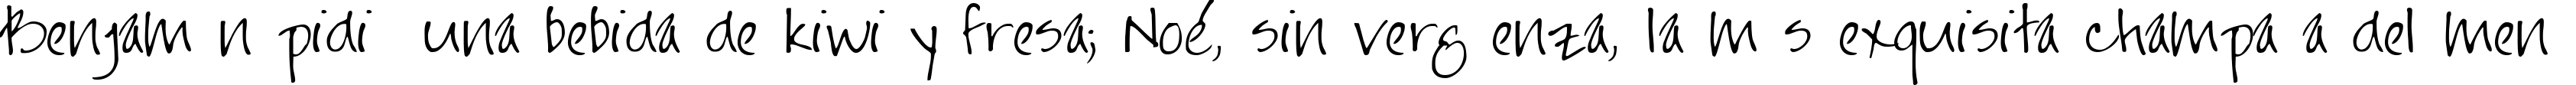 Пример написания шрифтом Jayne Print Hand текста на испанском